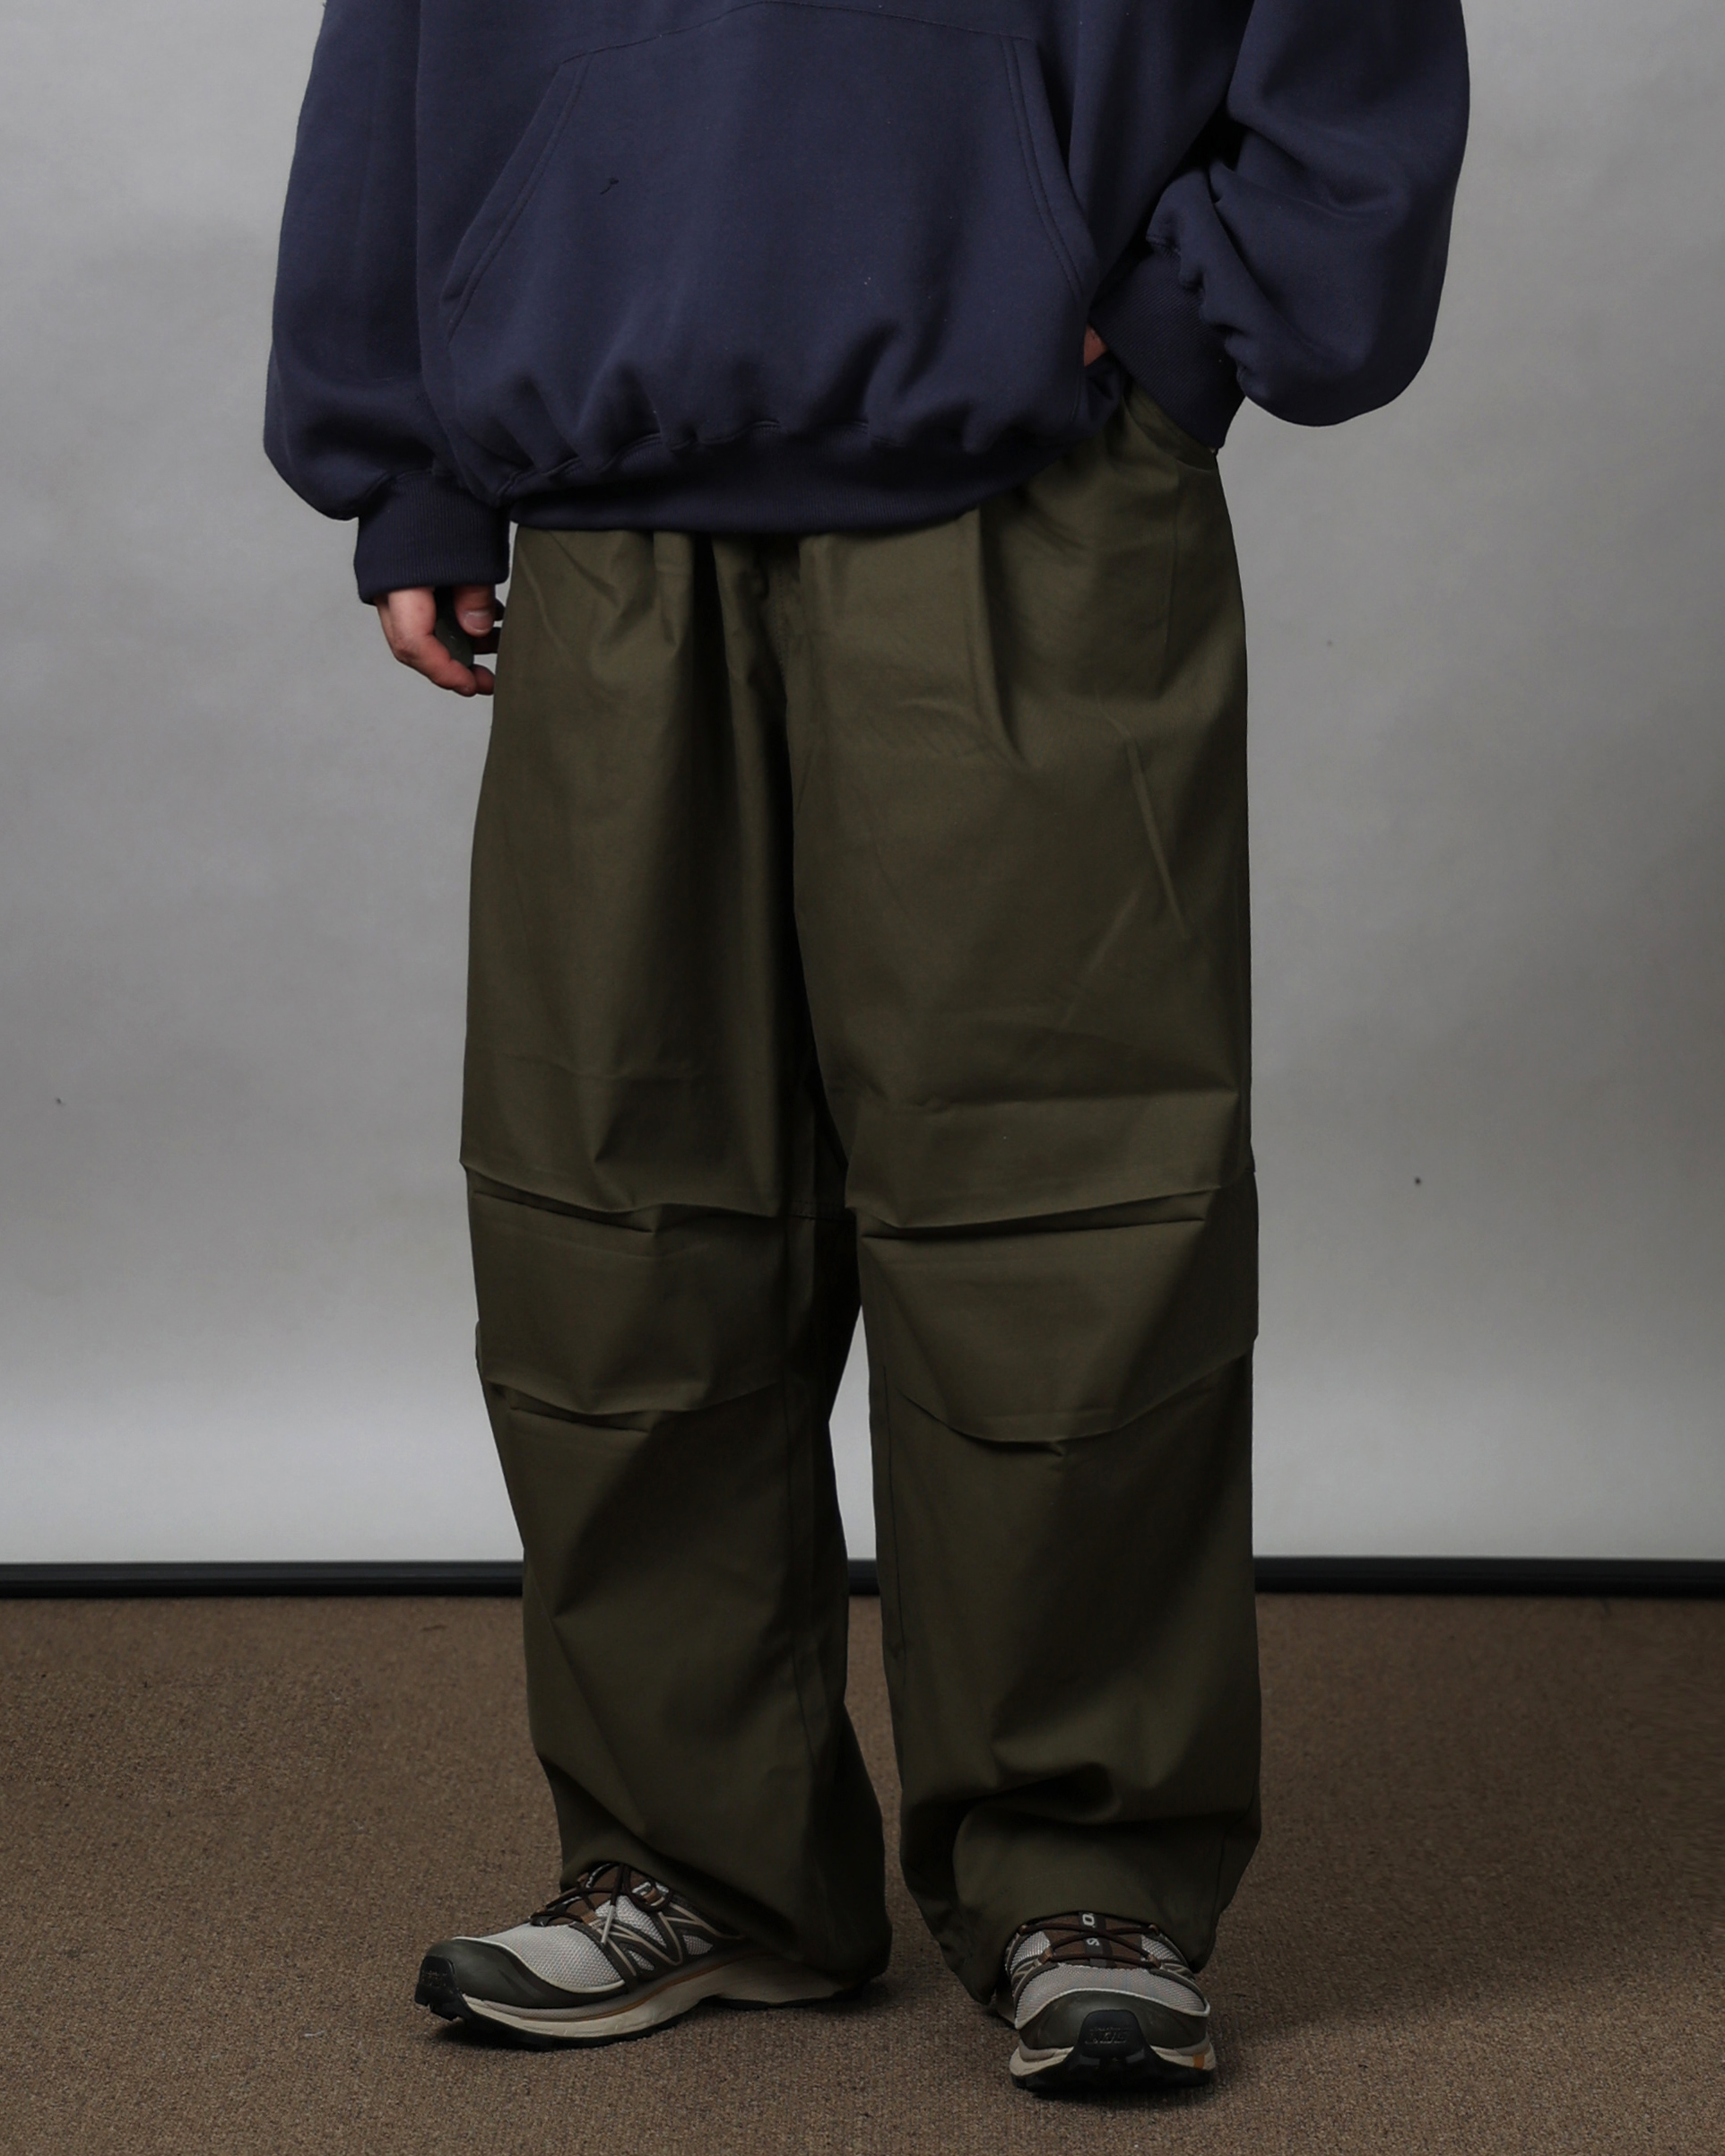 WAOT Bulky Cotton Parachute Pants (Black/Olive/Gray/Beige) - 15차 리오더 (그레이 5/9 배송예정)